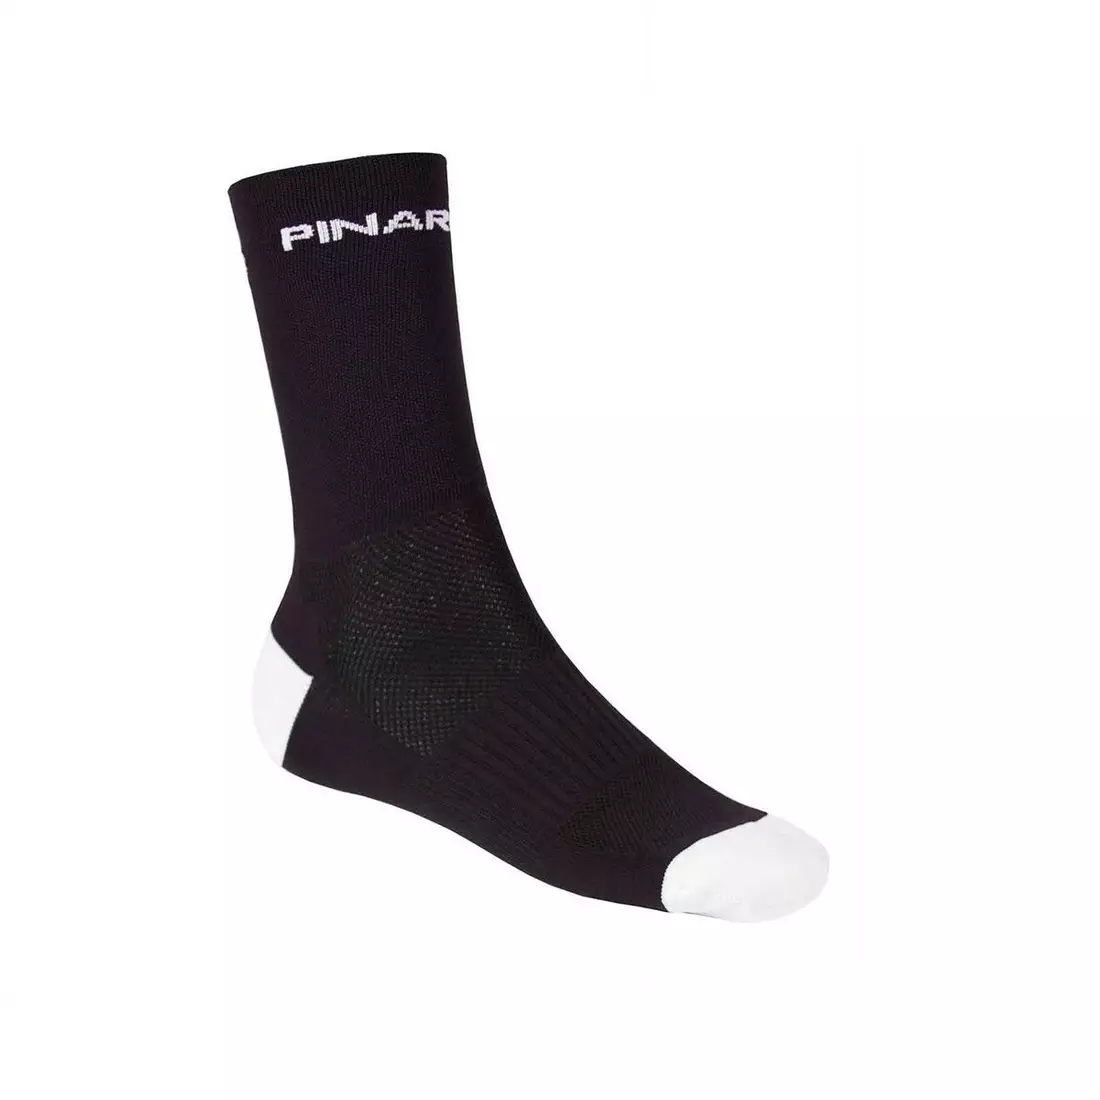 PINARELLO TALL CUFF sports socks (high), black and white